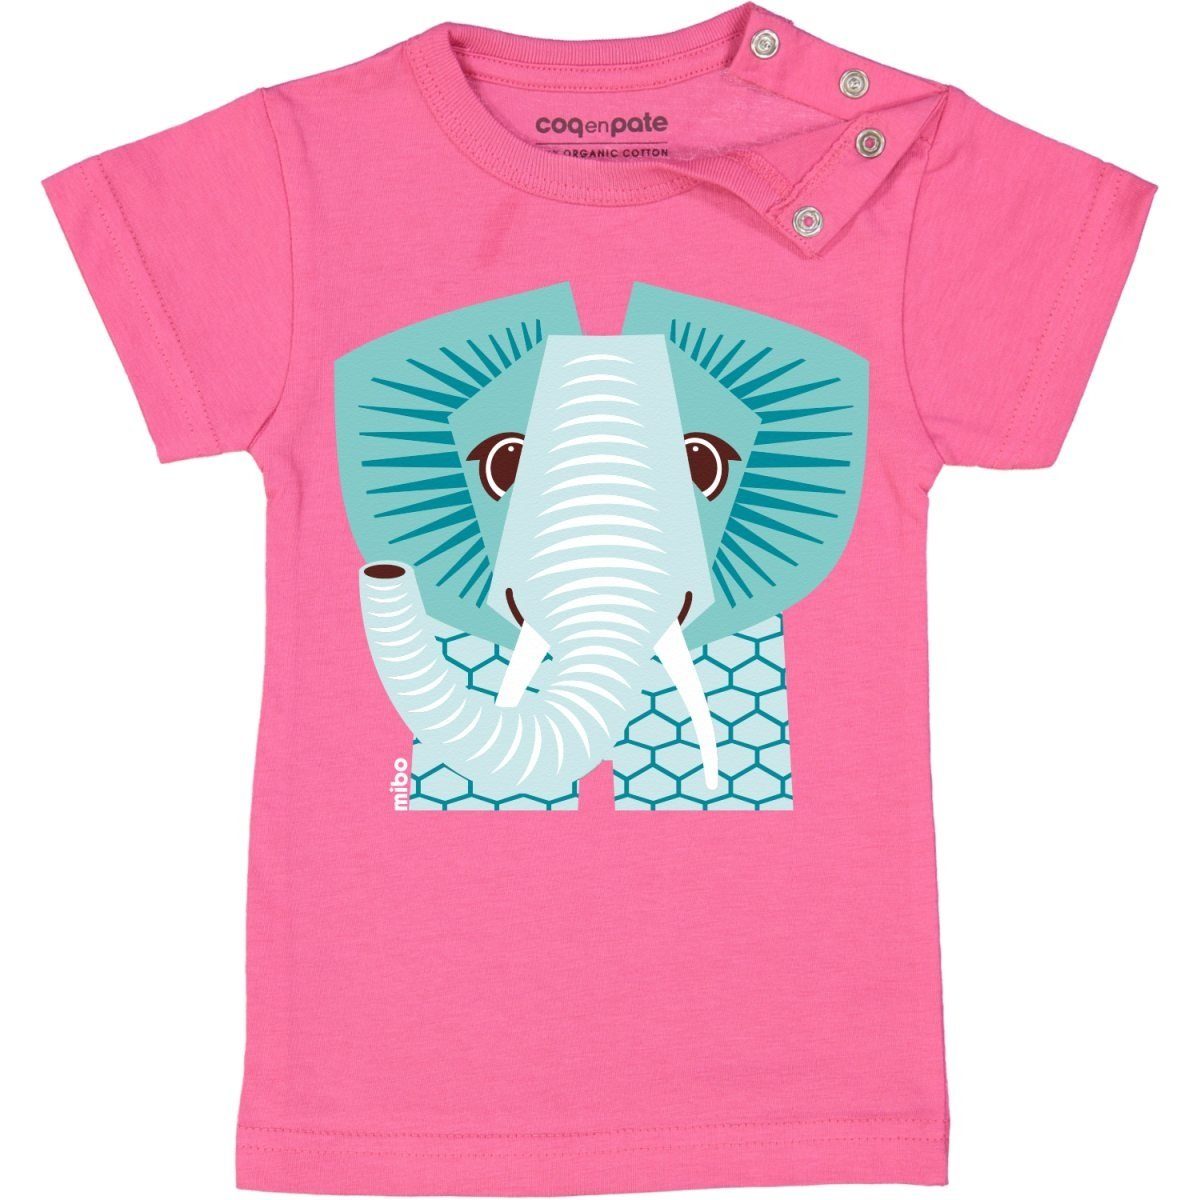 COQ EN PATE T-Shirt Kurzarm T-Shirt Elefant 1 Jahr Kinder Rosa Unisex beidseitig bedruckt